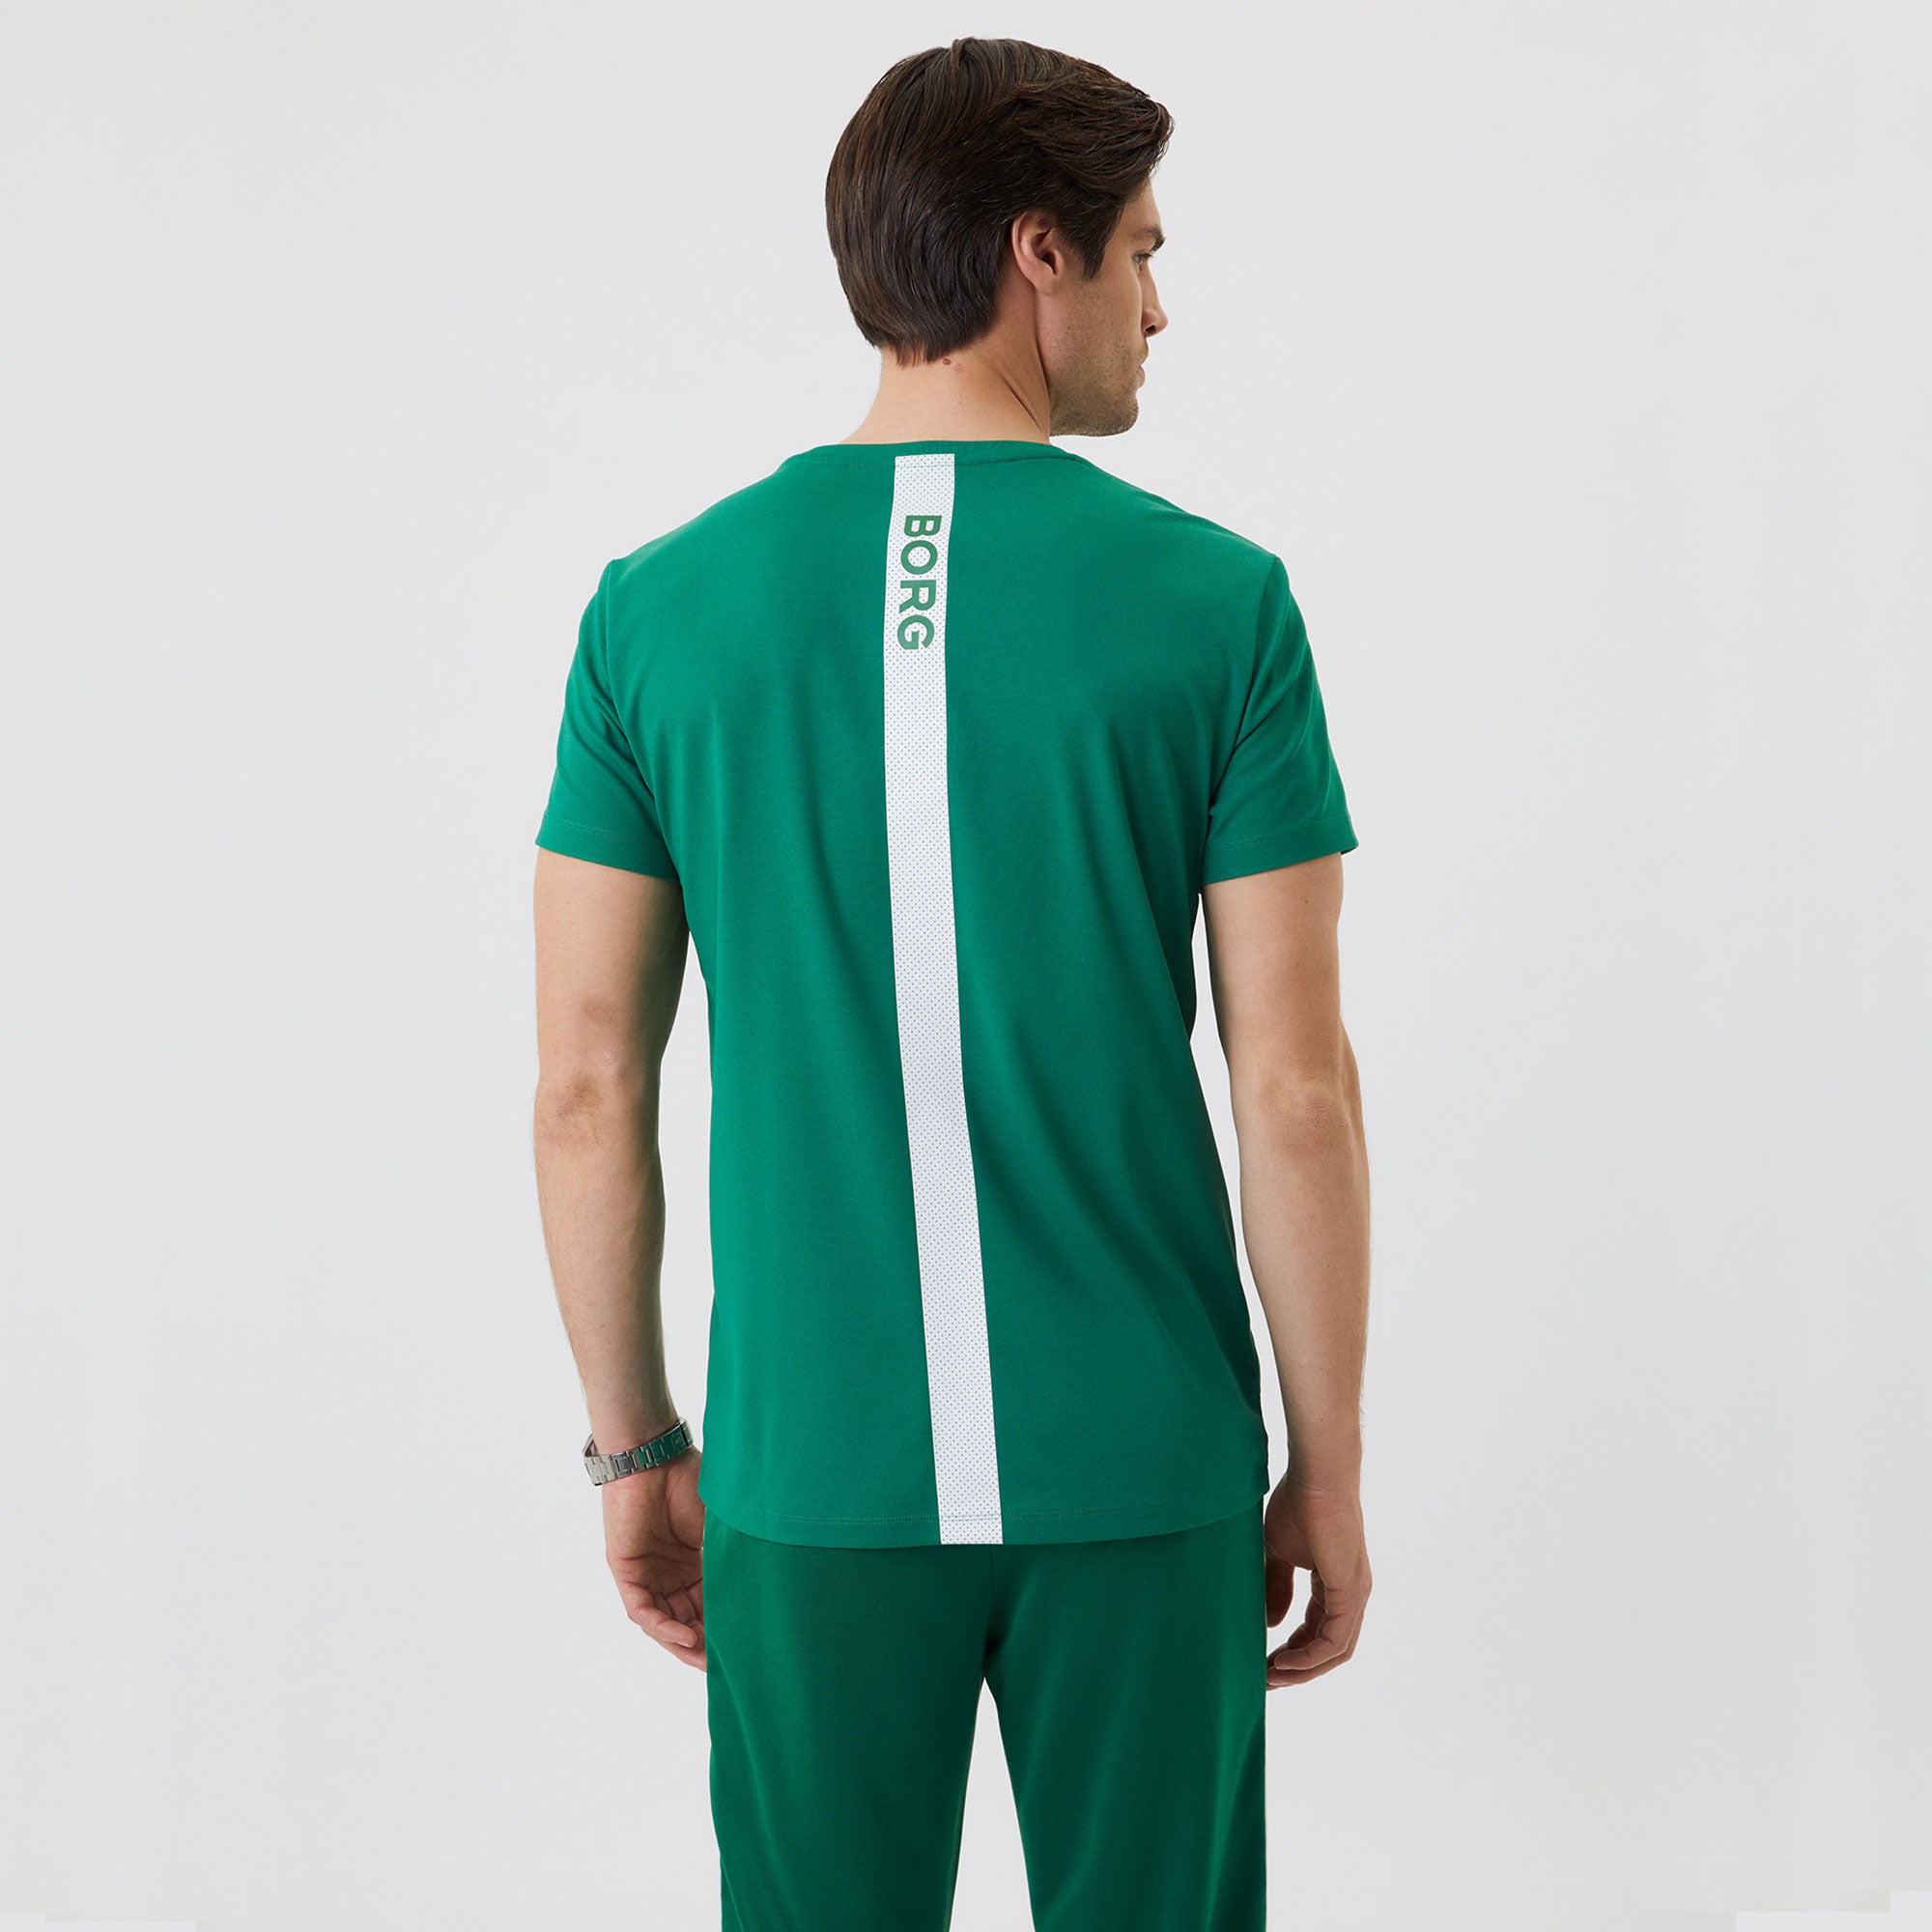 Björn Borg Ace Men's Tennis Shirt Green (2)